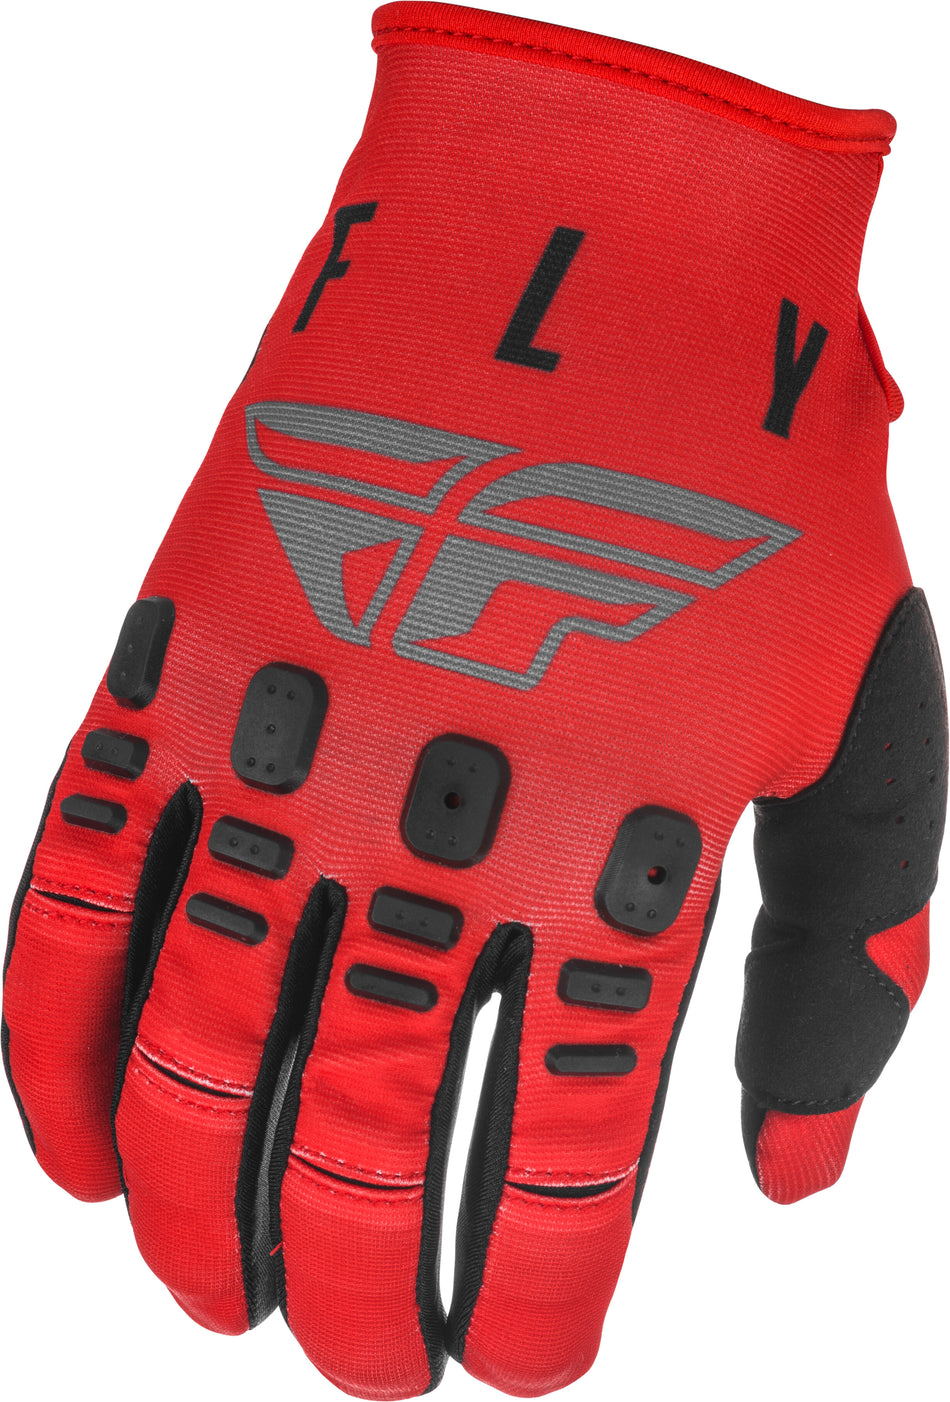 FLY RACING Kinetic K121 Gloves Red/Grey/Black Sz 10 374-41210